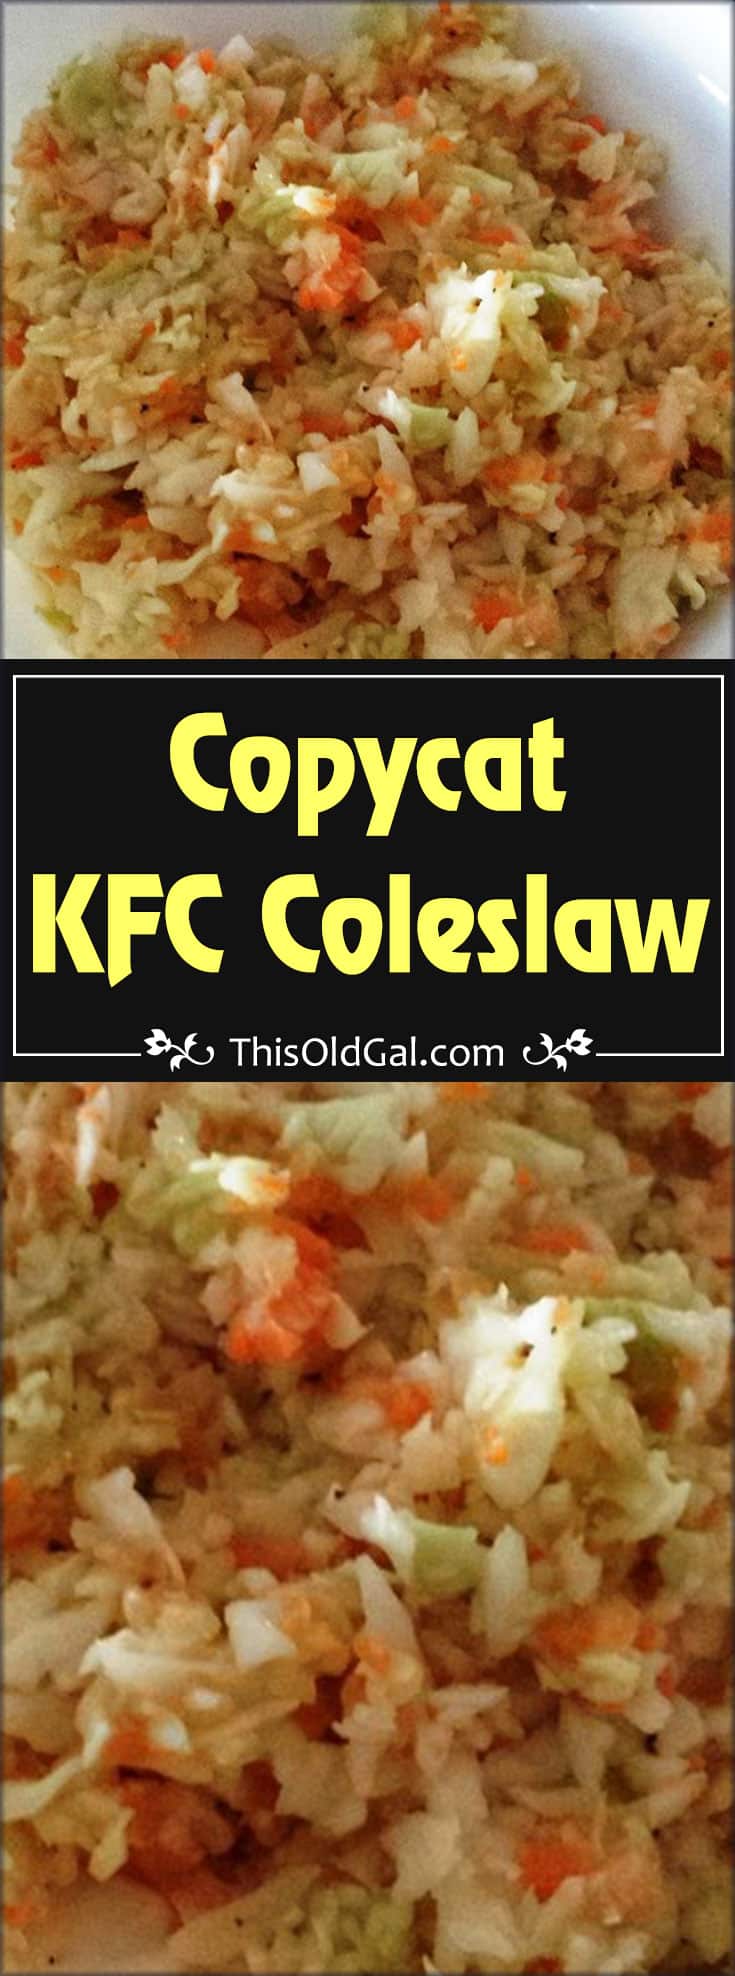 Copycat KFC Coleslaw Recipe